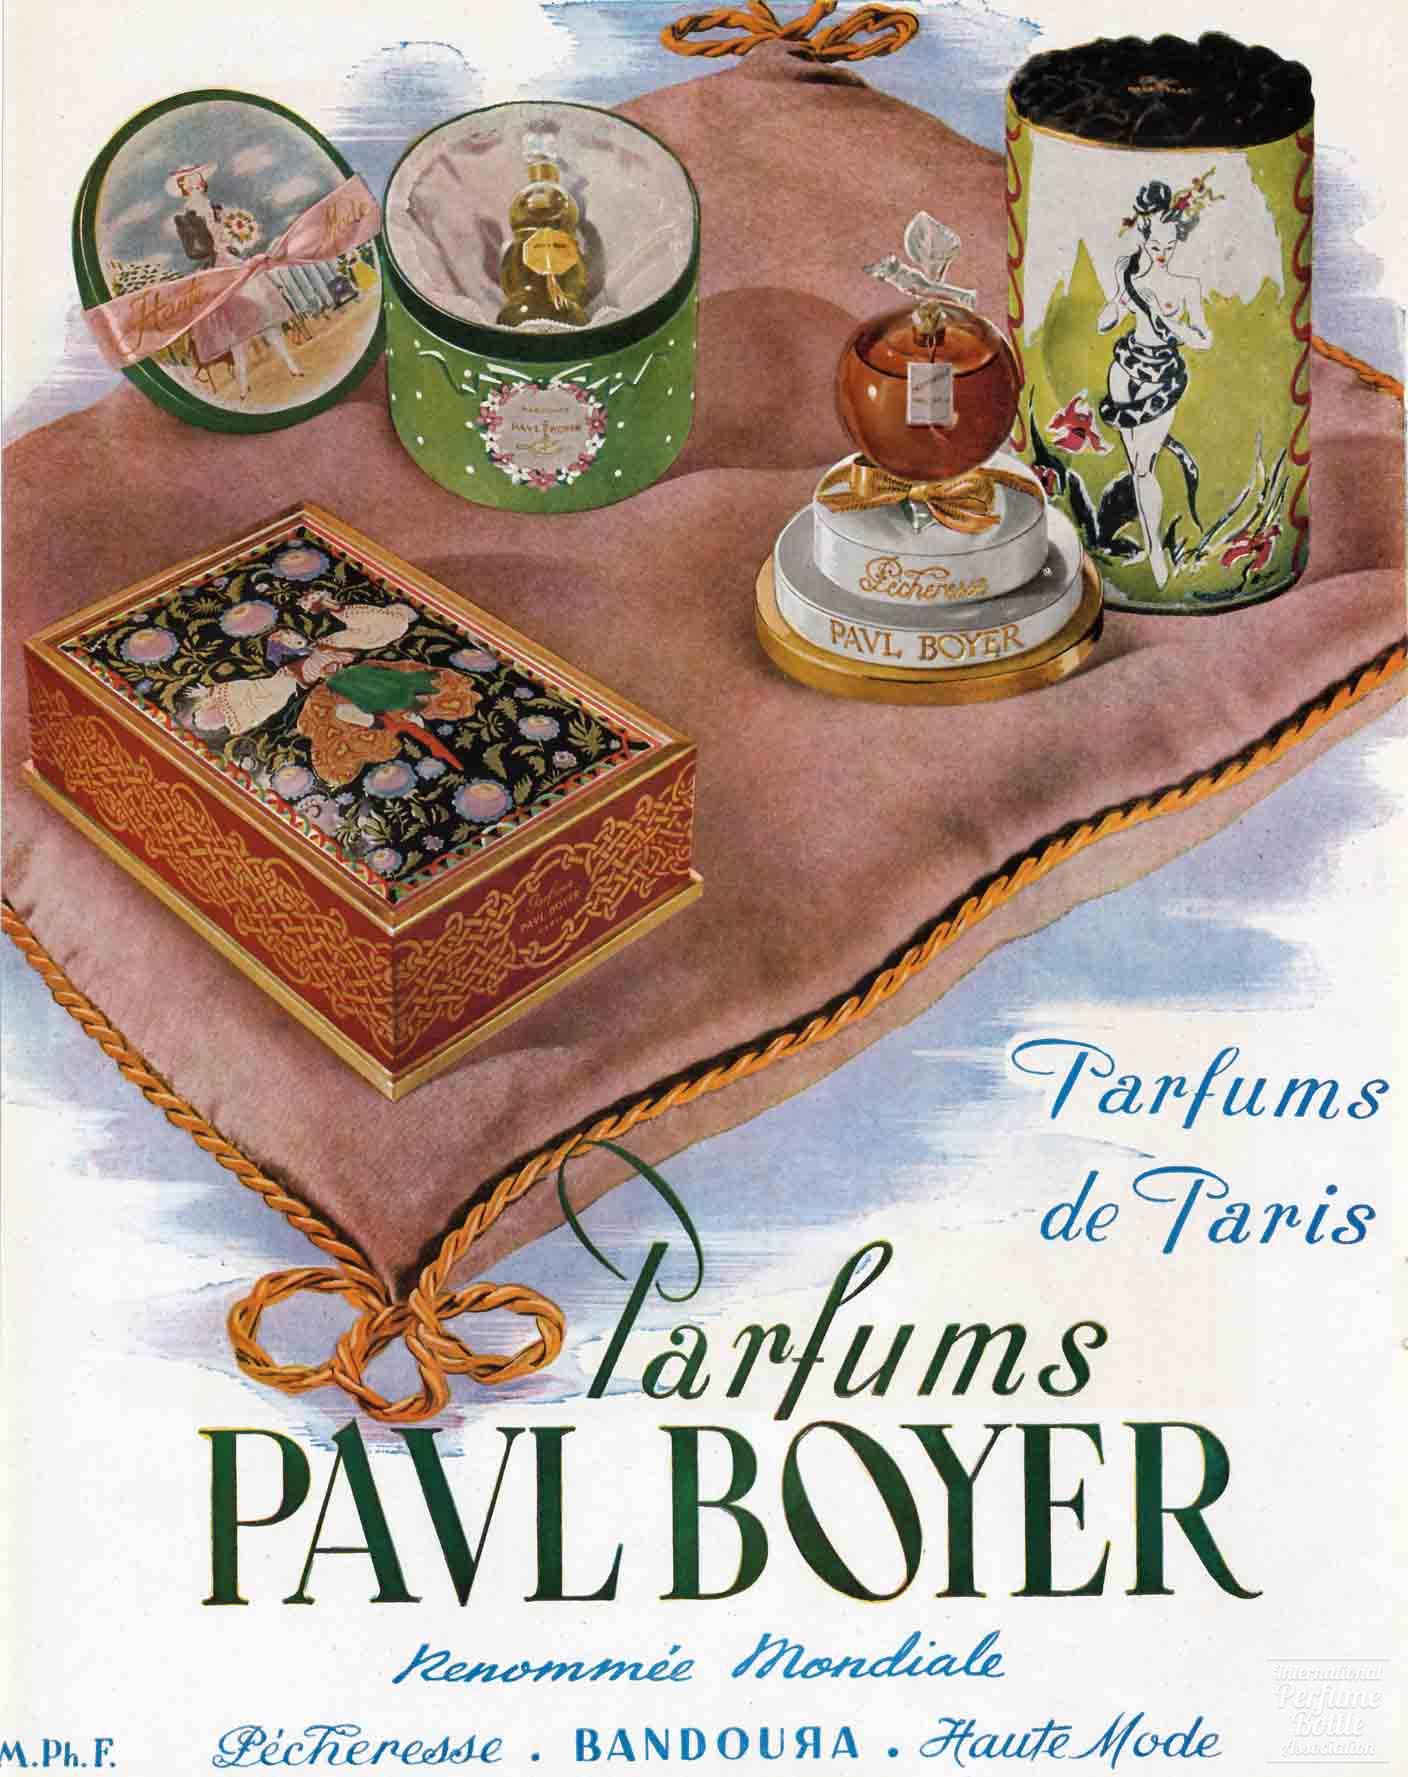 Parfums Paul Boyer Advertisement - 1946